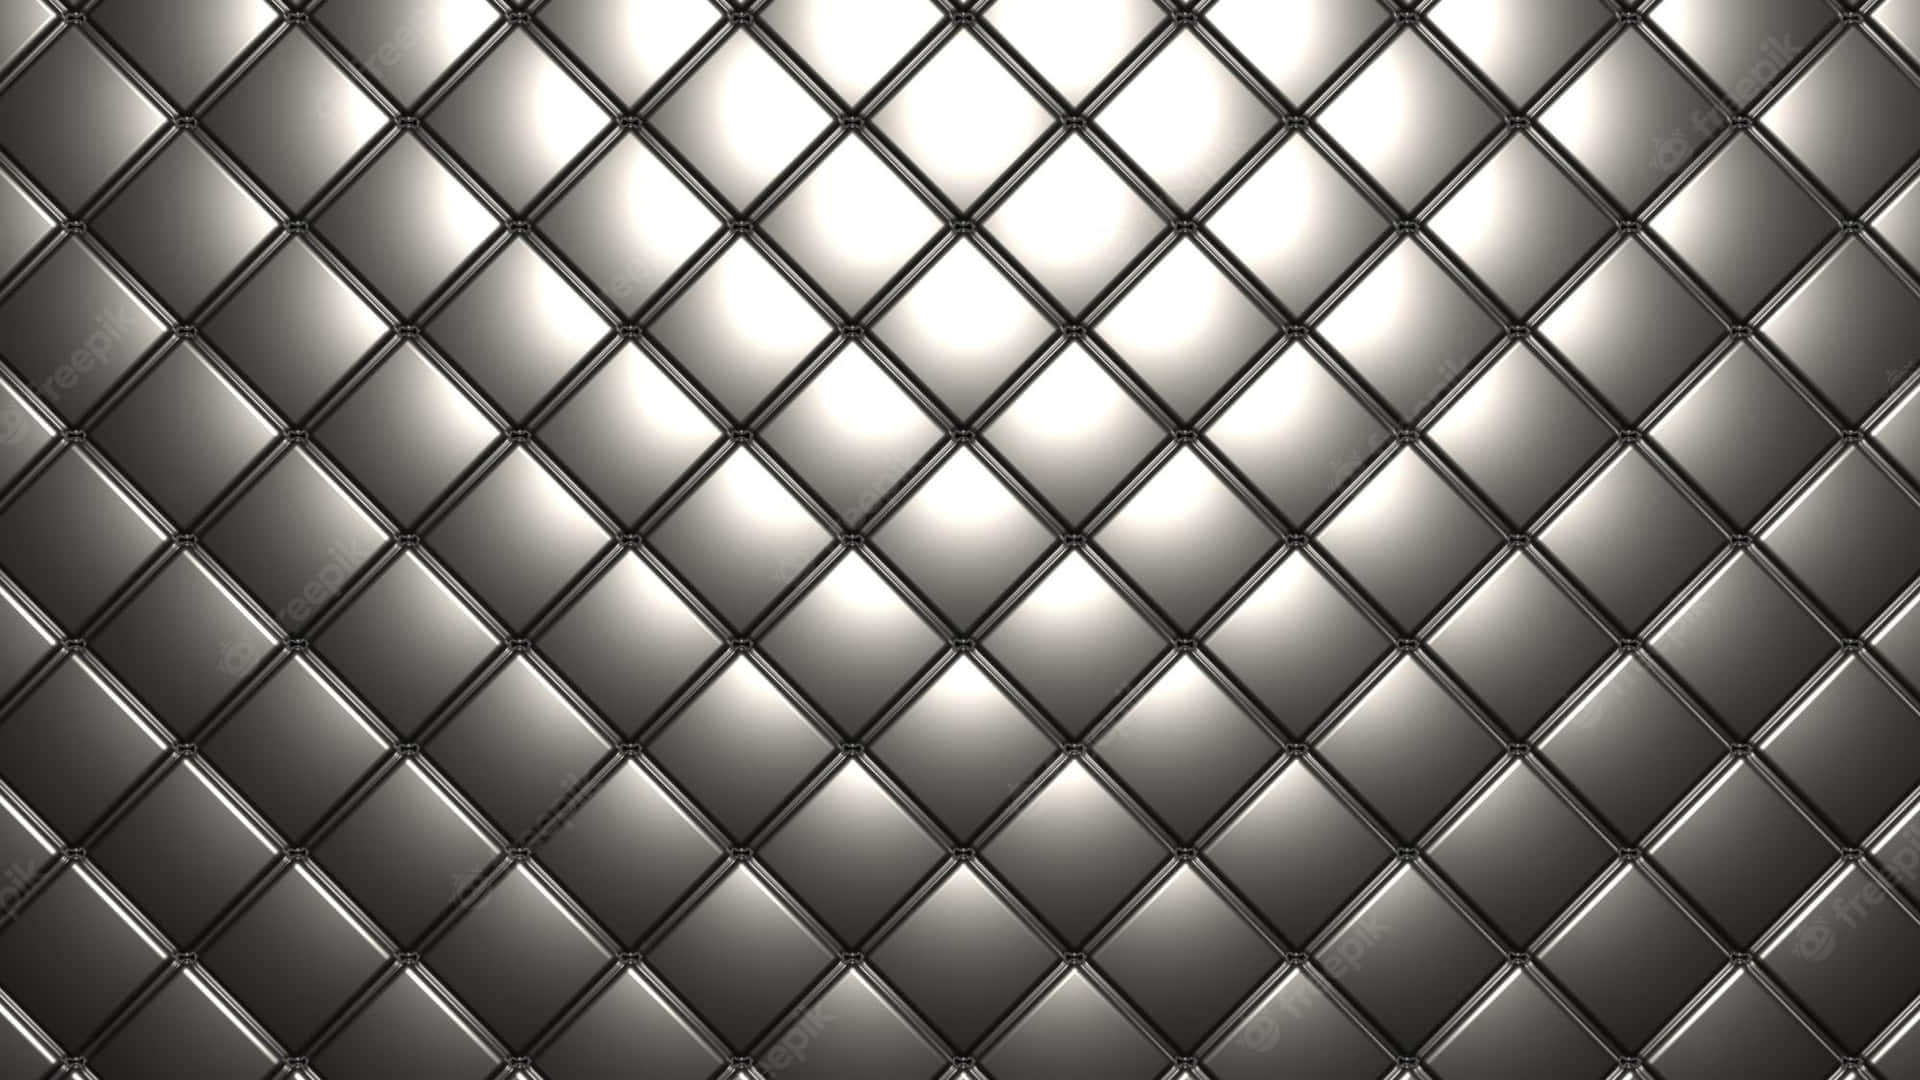 2900 Diamond Plate Stock Photos Pictures  RoyaltyFree Images  iStock   Diamond plate background Diamond plate texture Diamond plate metal